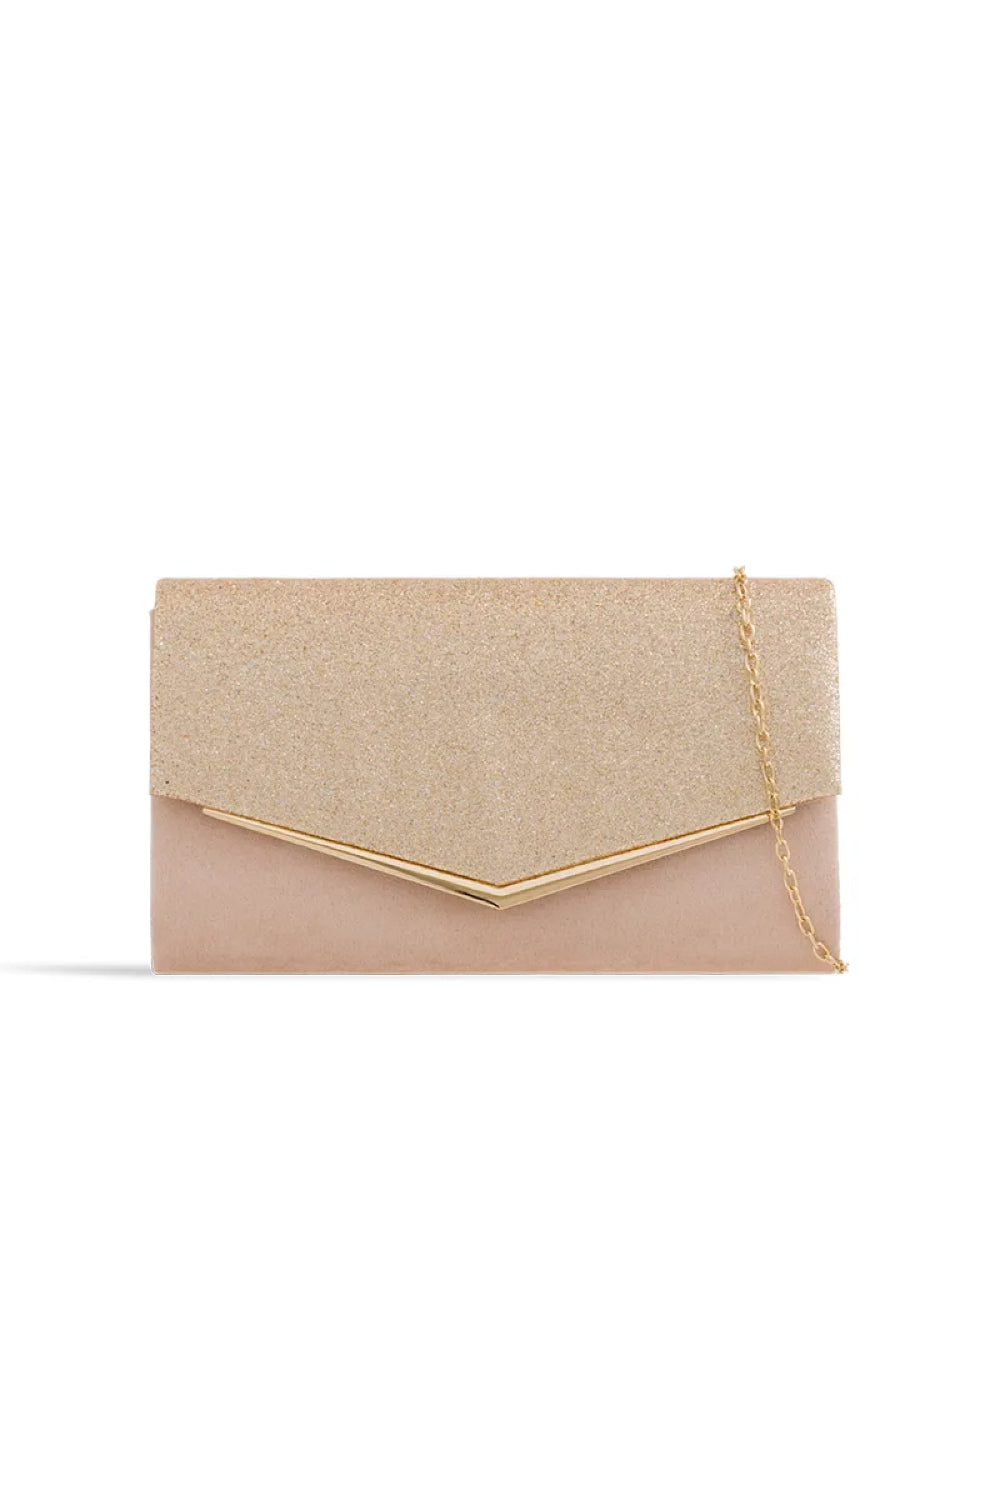 Nude Blush Glitter Envelope Clutch Bag